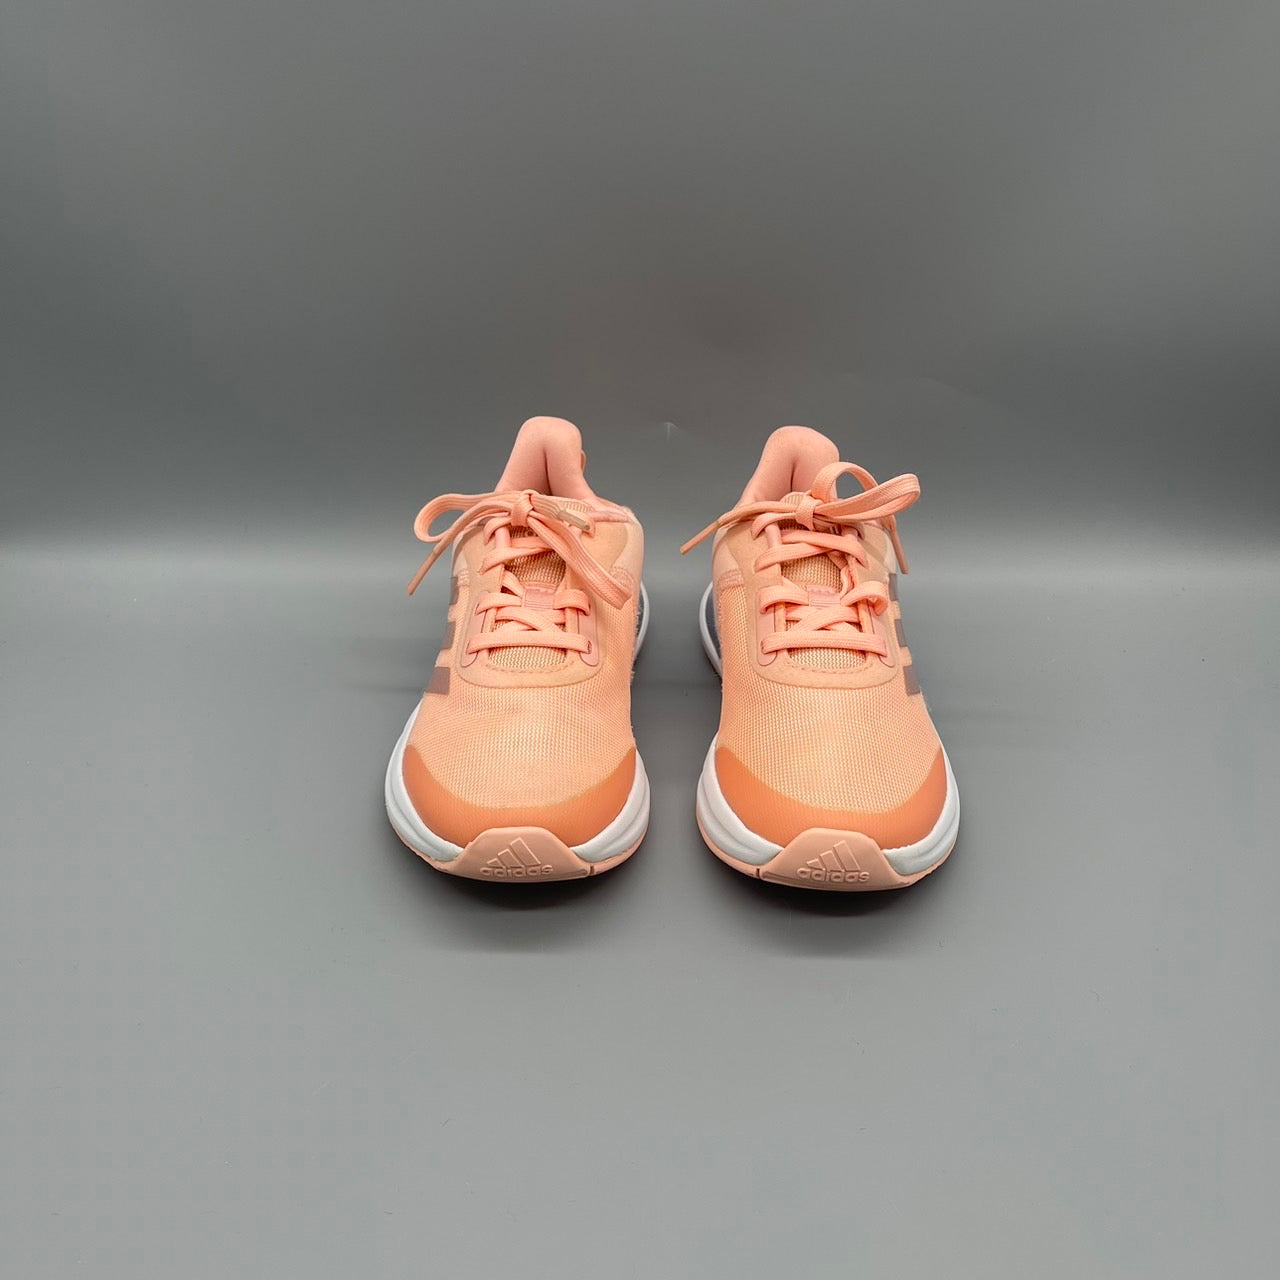 Adidas / Runner / US11